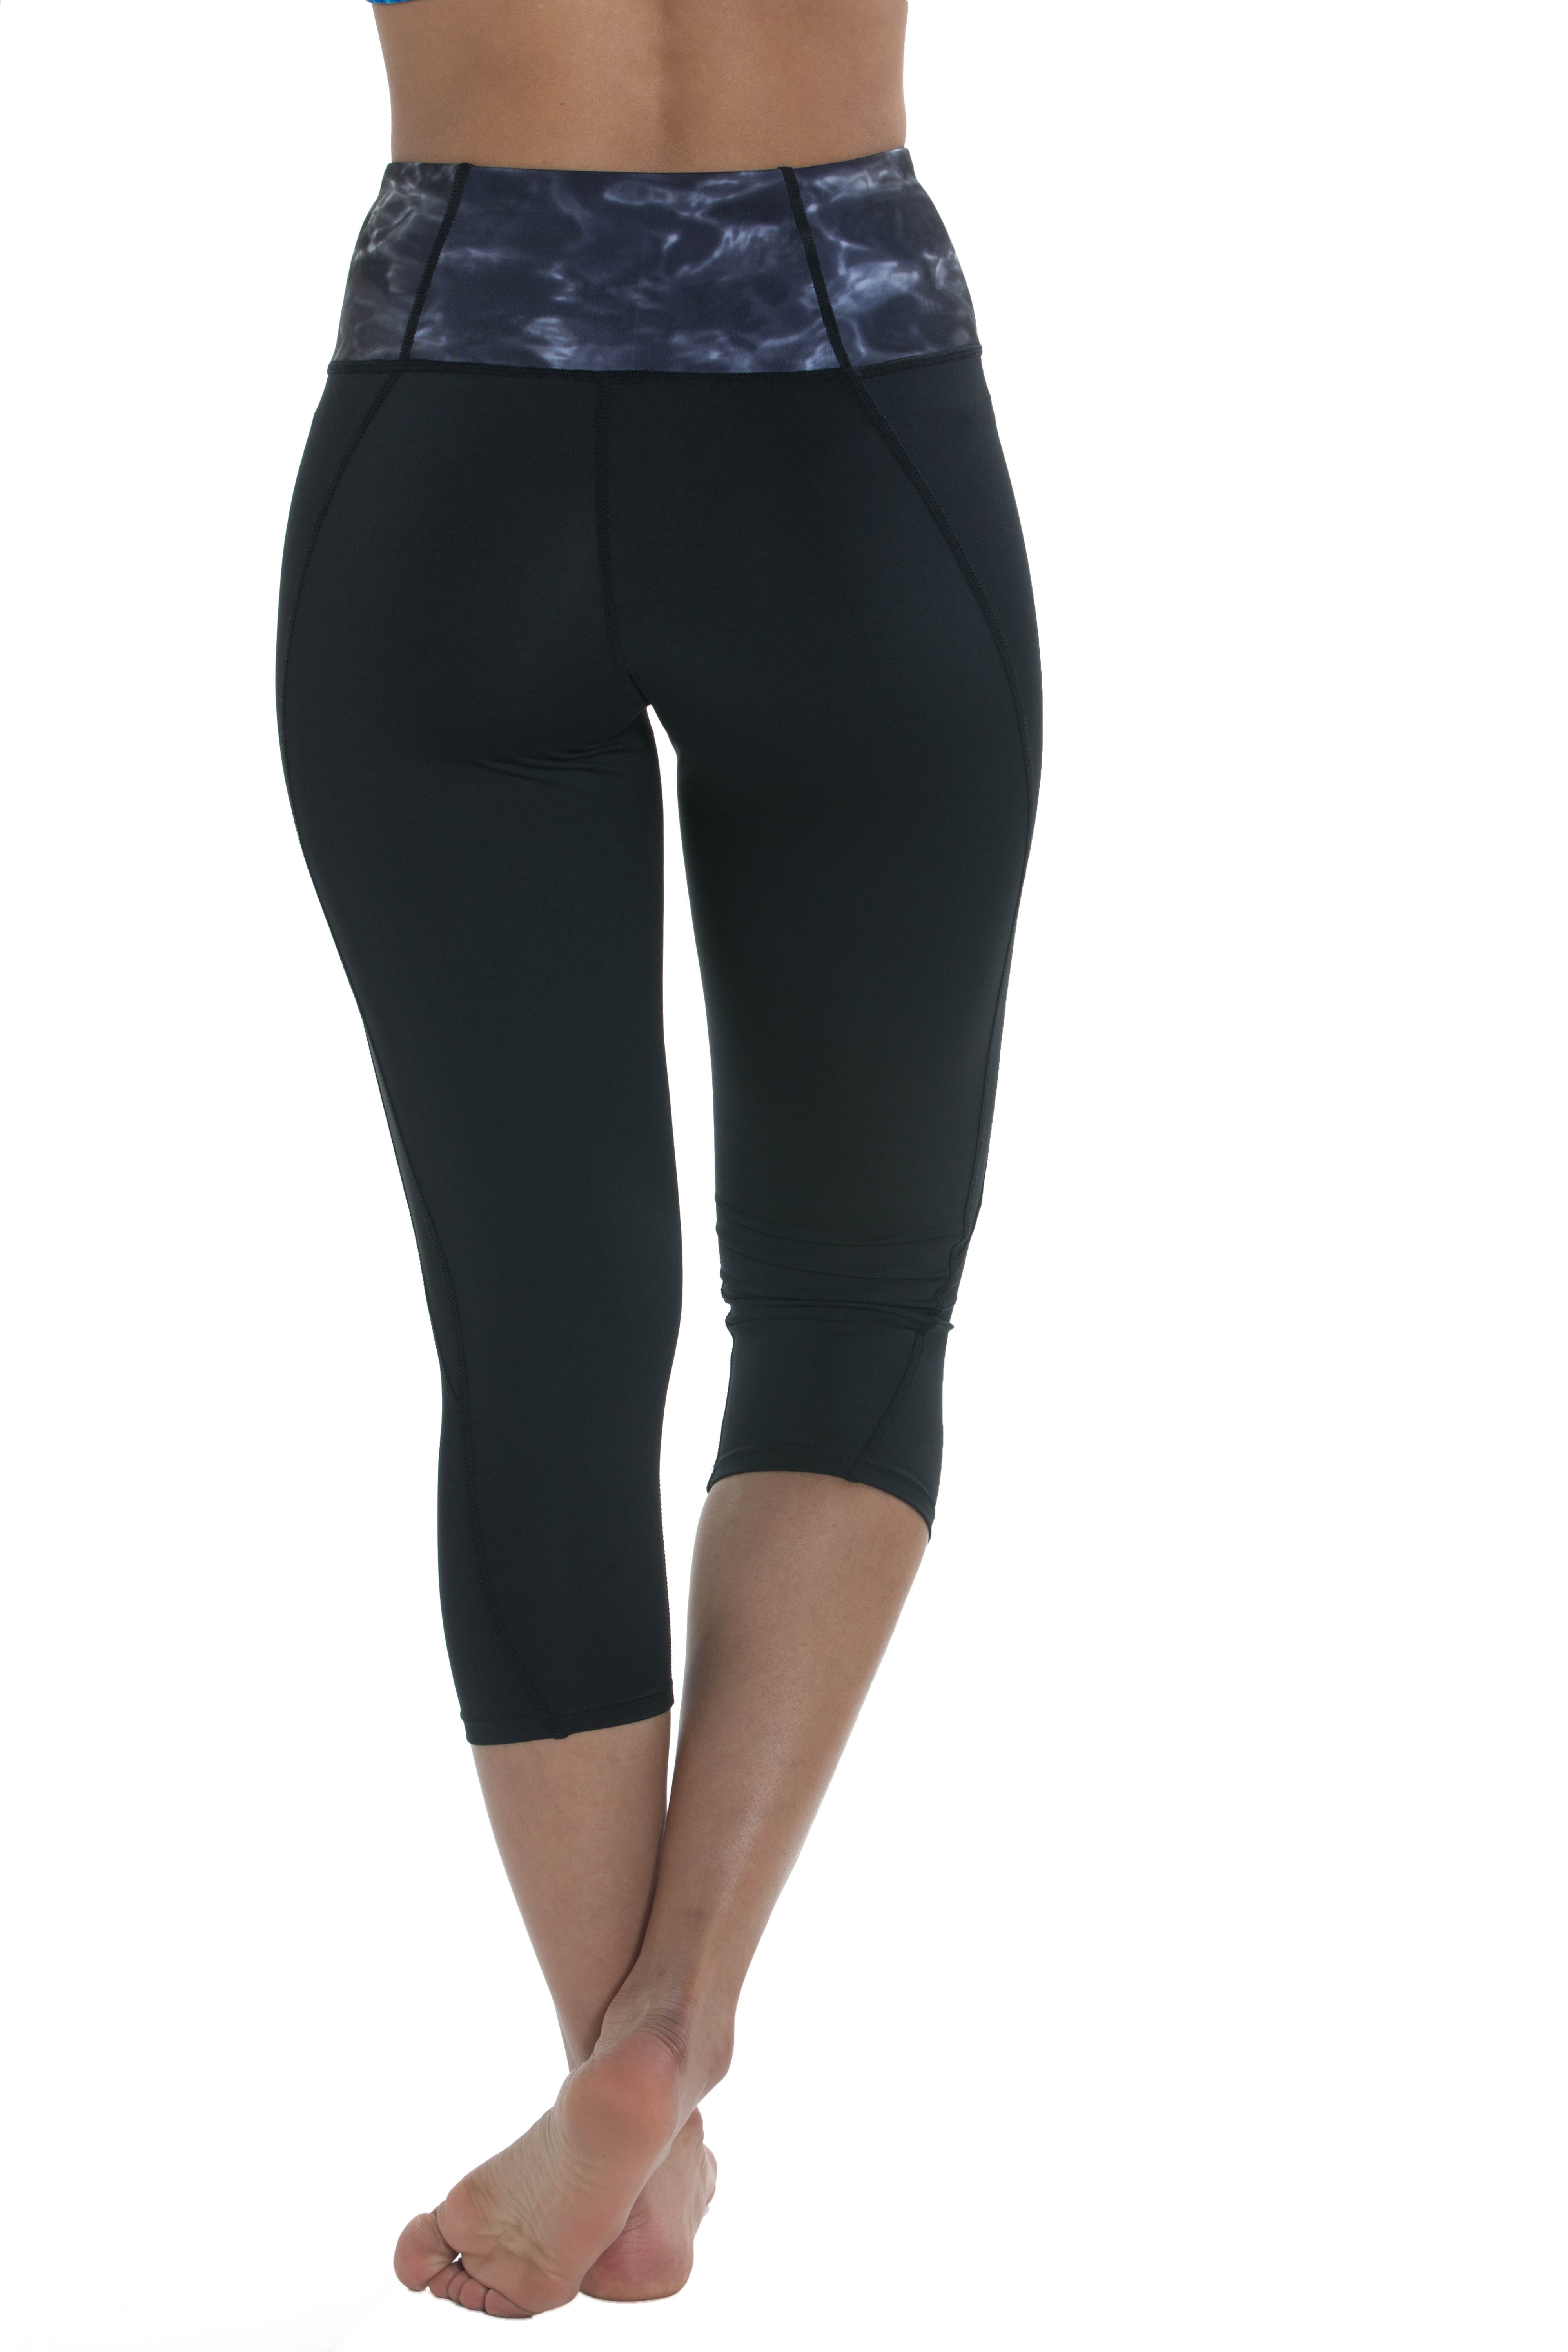 Aqua Design High Waisted Capri Leggings for Women: Black Water/Black size  Large 